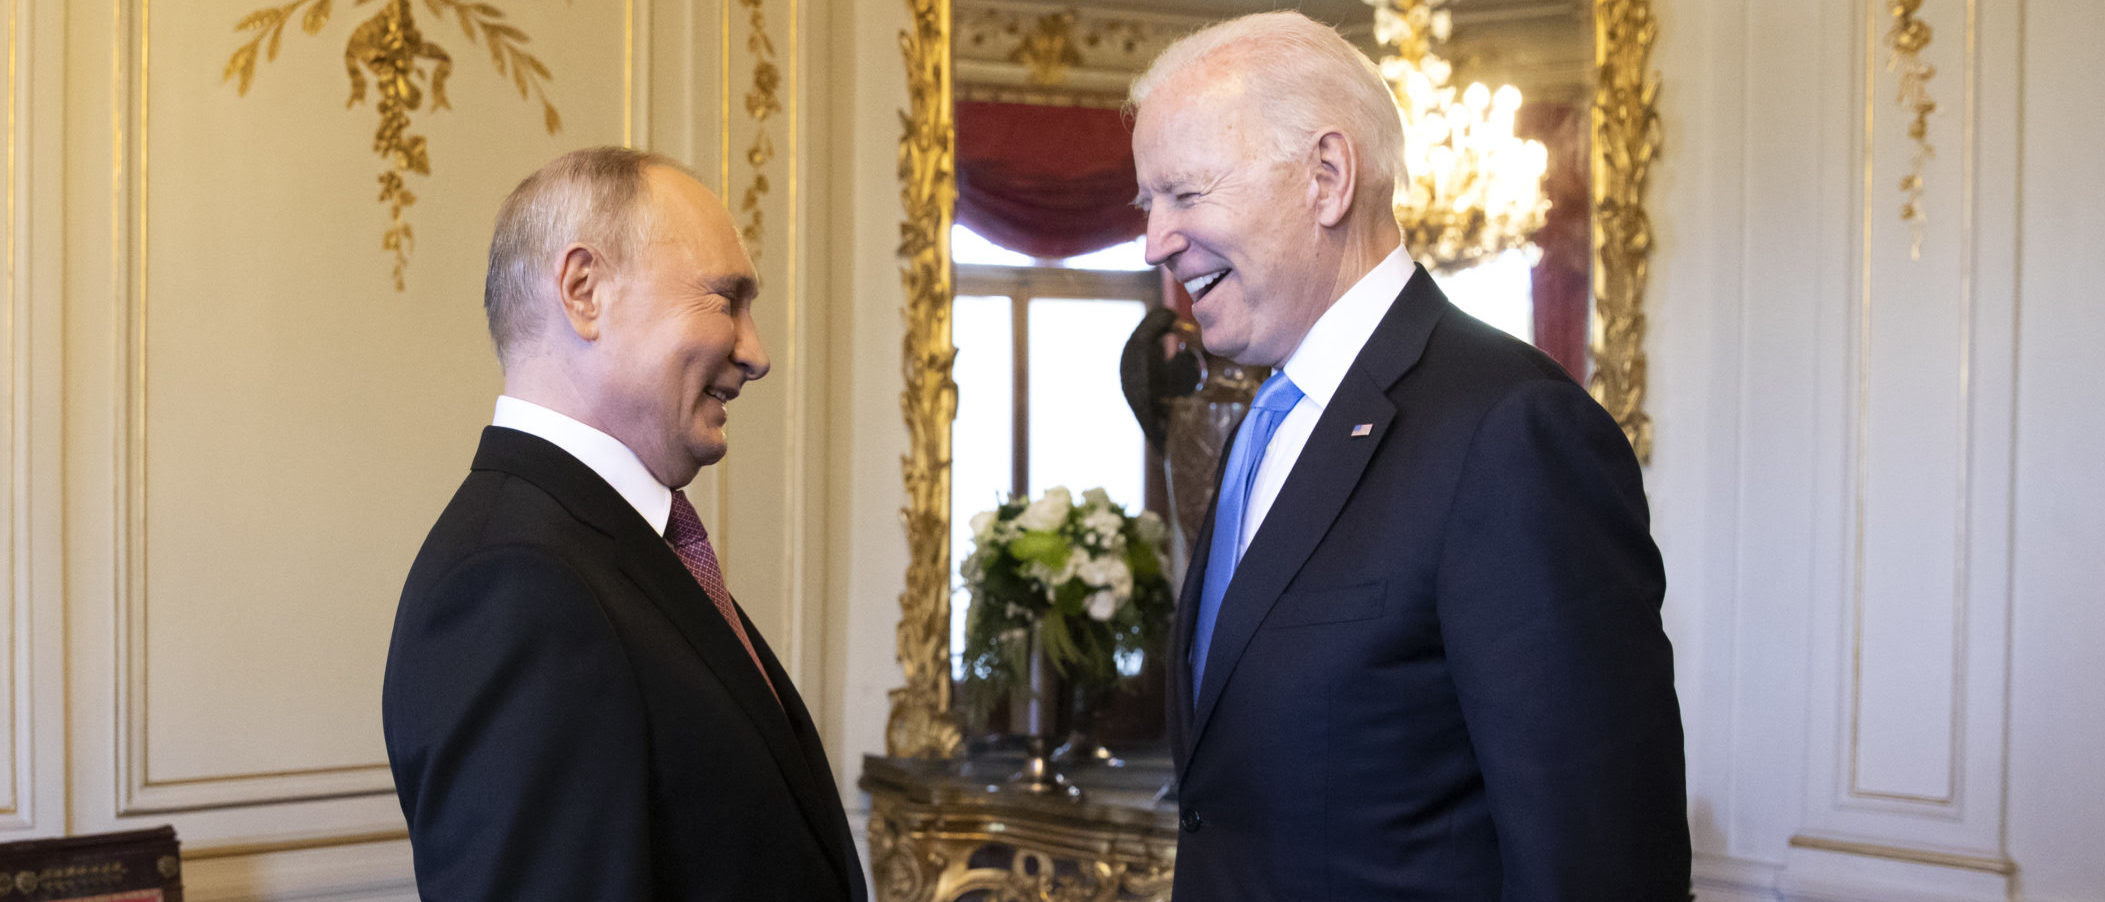 REPORT: Biden Admin Plans On Advising Ukraine To Hand Over Territory To Russia